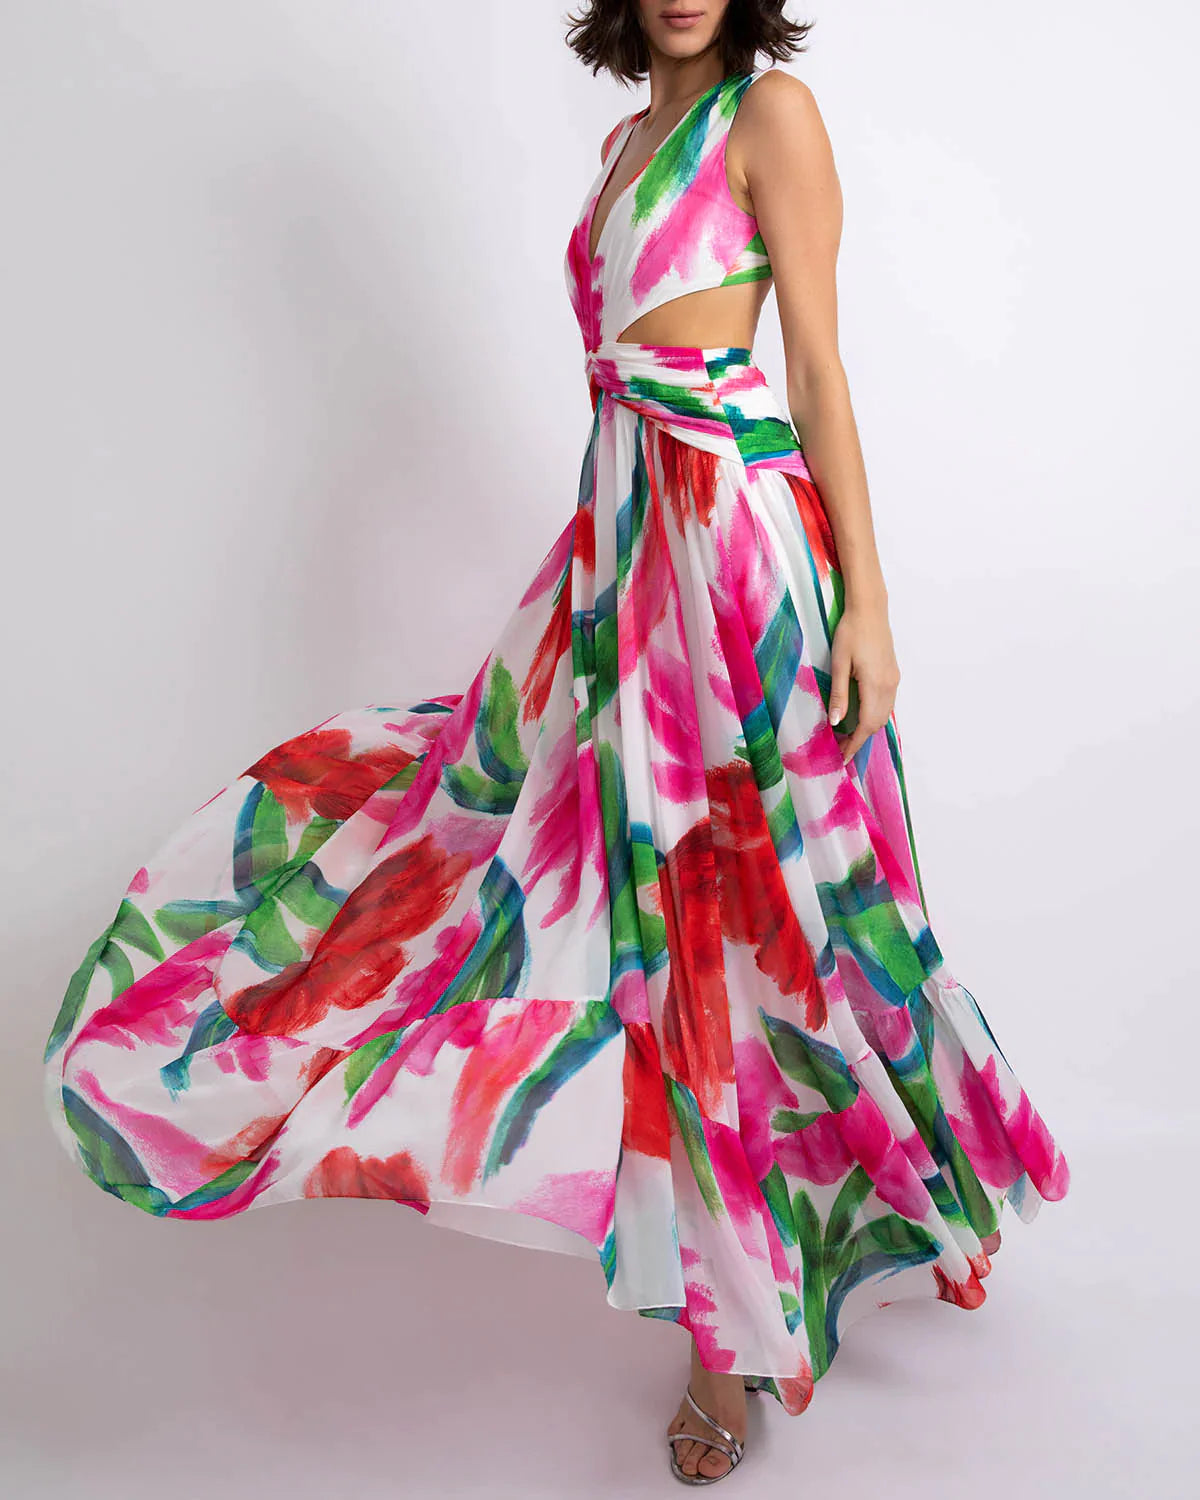 PatBo Allegro Cut Out Maxi Dress - Premium Long dress from Marina St Barth - Just $795.00! Shop now at Marina St Barth